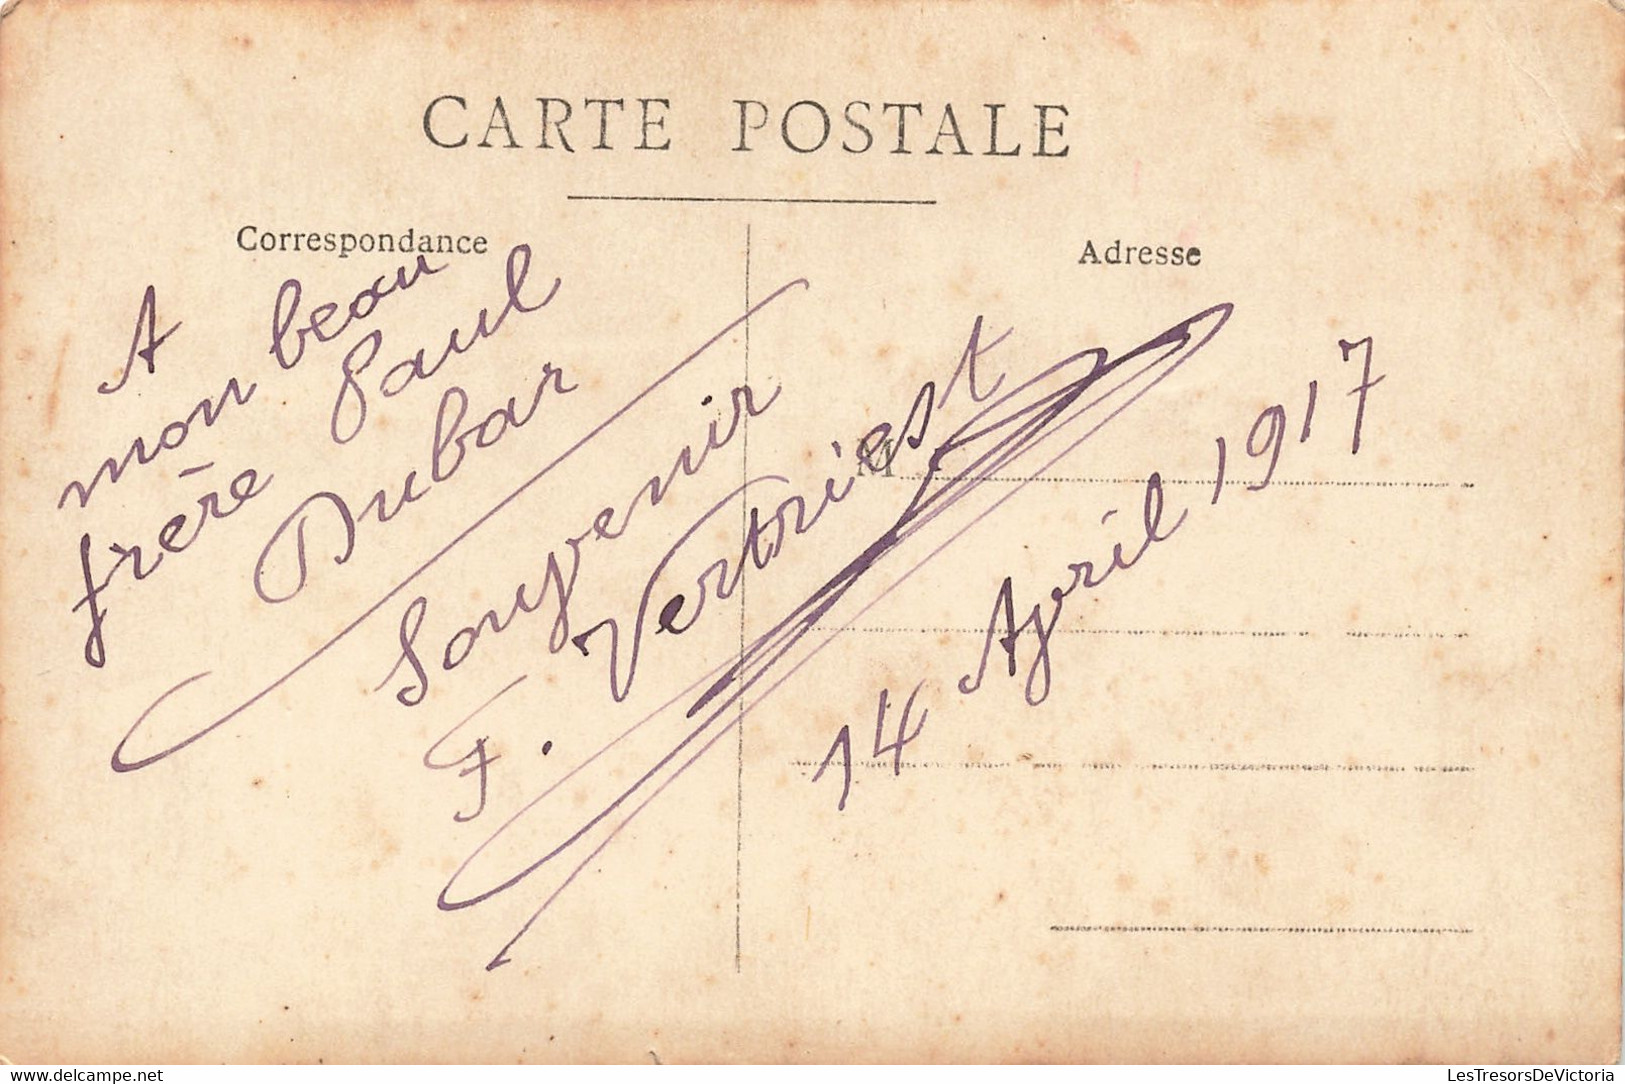 CPA - Militaria - Carte Photo  - Identification Paul Dubar - F. Vertriest - 1917 - Characters